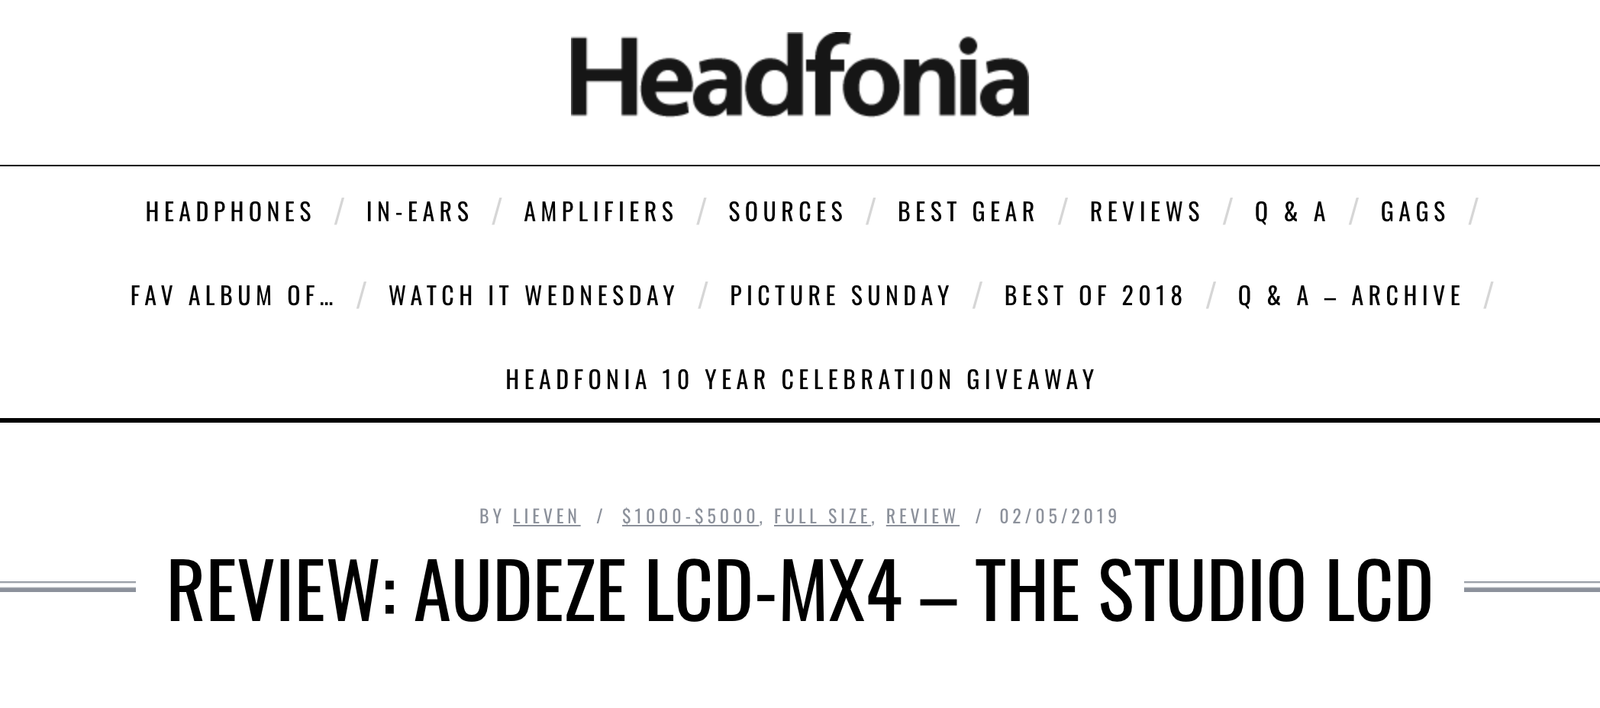 Audeze LCD-MX4 Review — Headfonics